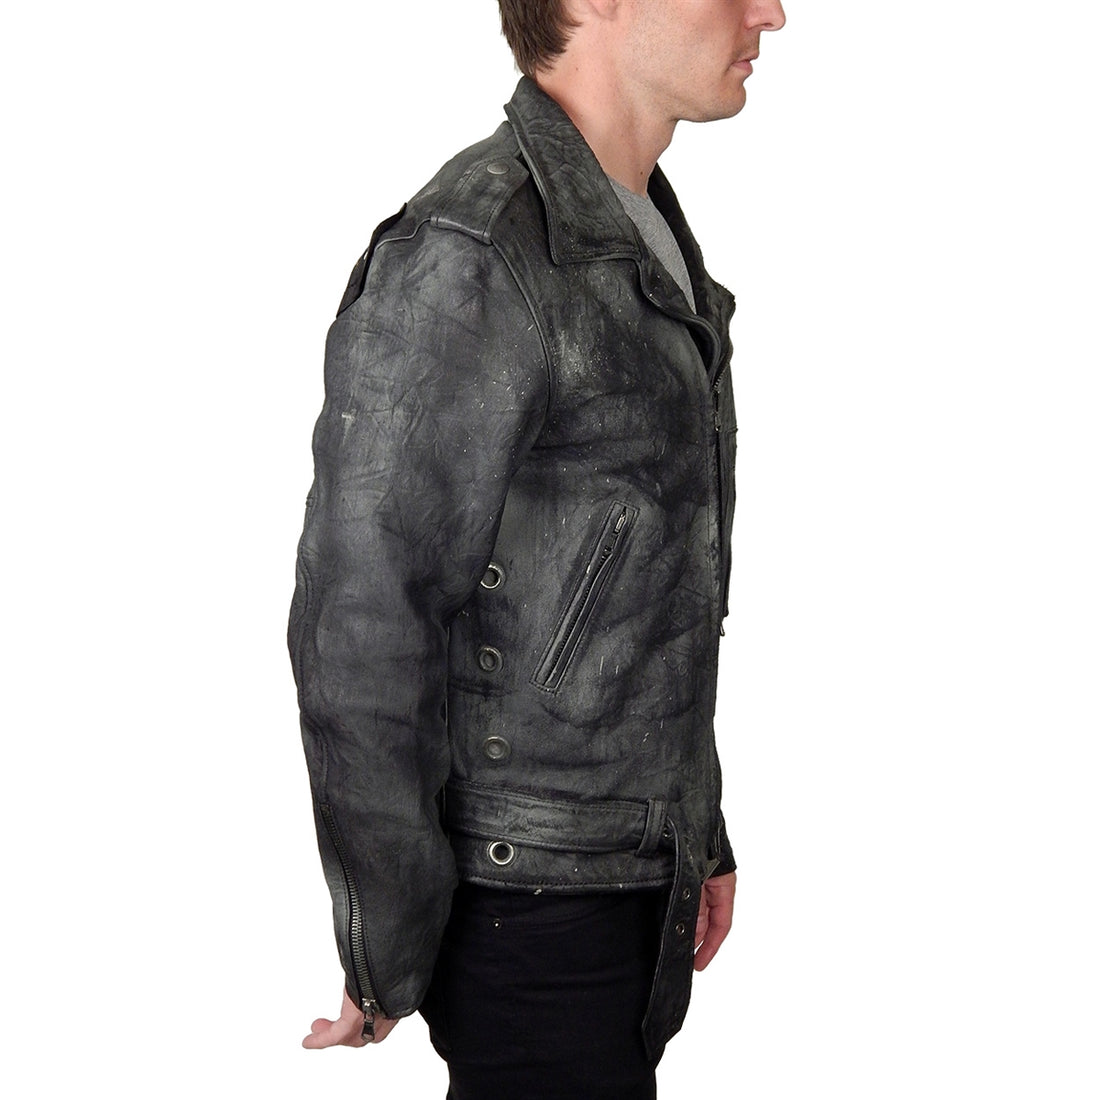 JUNKER DESIGNS - "THE CARNIVORE" Exclusive Leather Biker Jacket